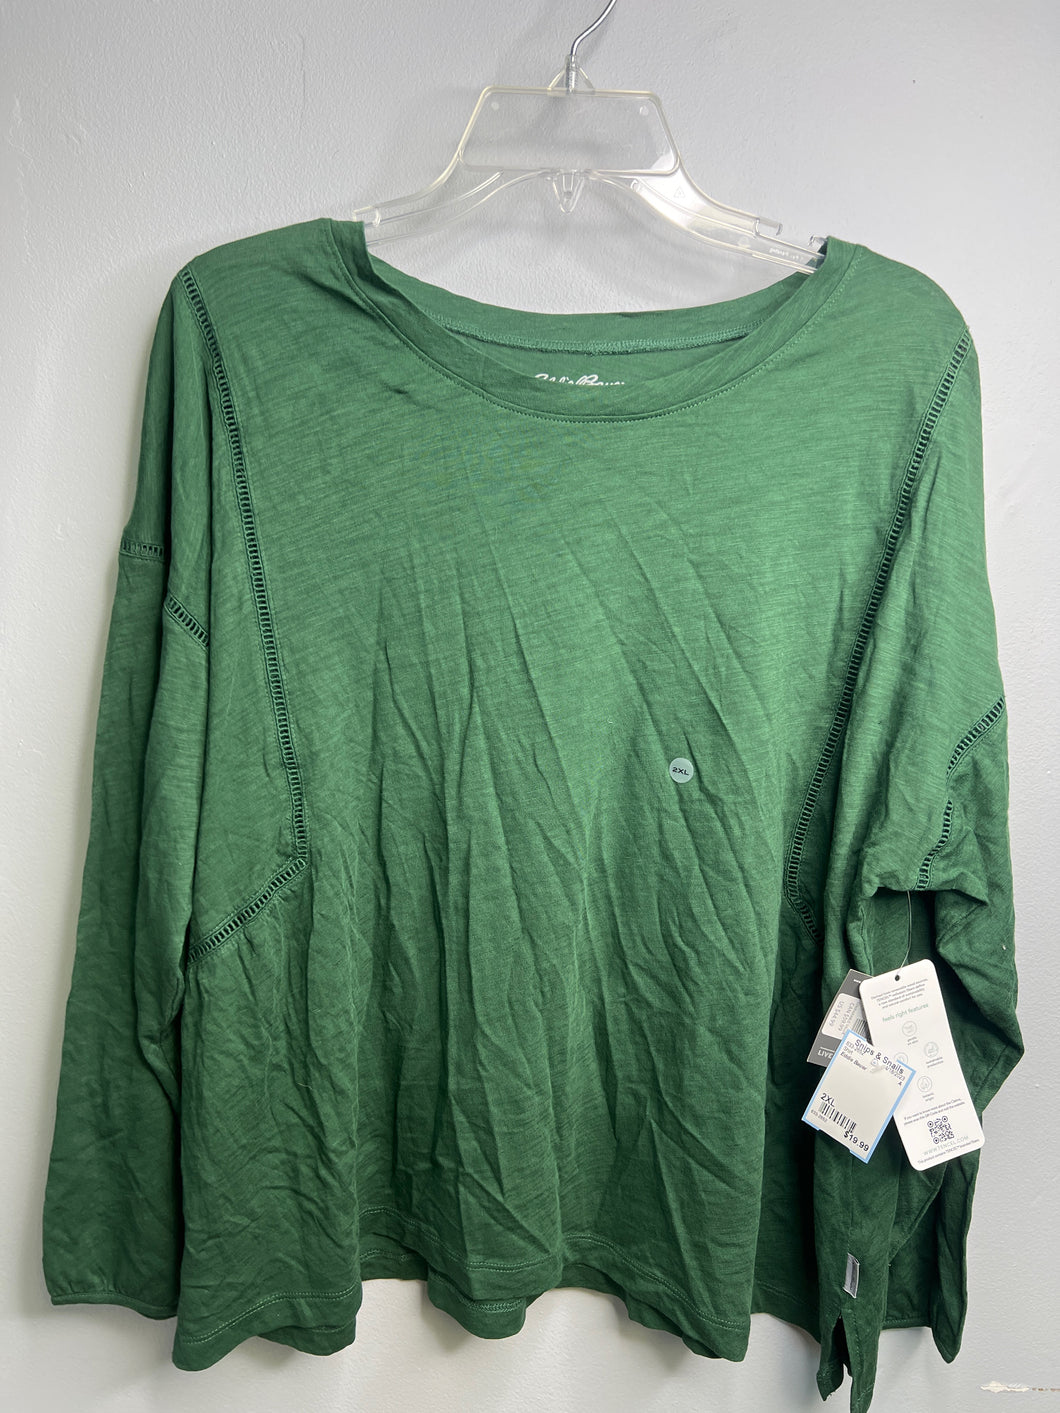 BNWT Womens Size 2XL Eddie Bauer Green Shirt